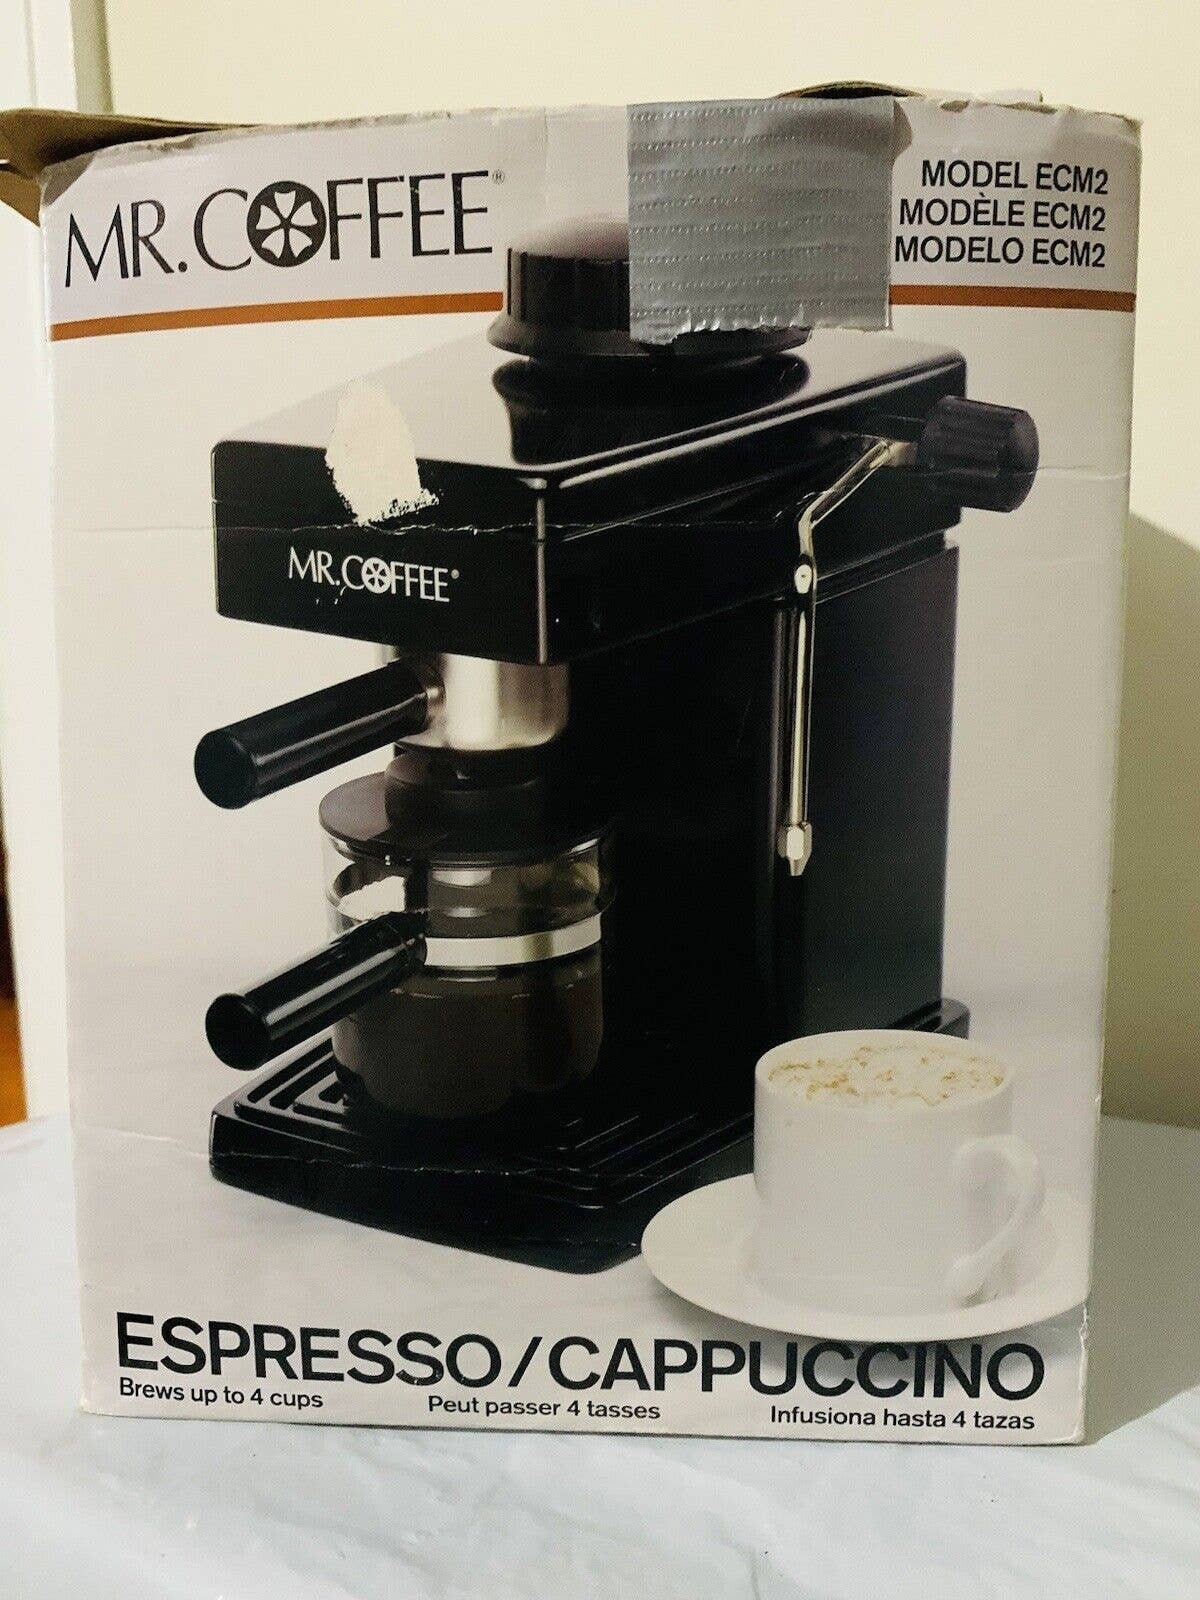 Mister Coffee Malaysia on Instagram: [Mister Coffee Espresso